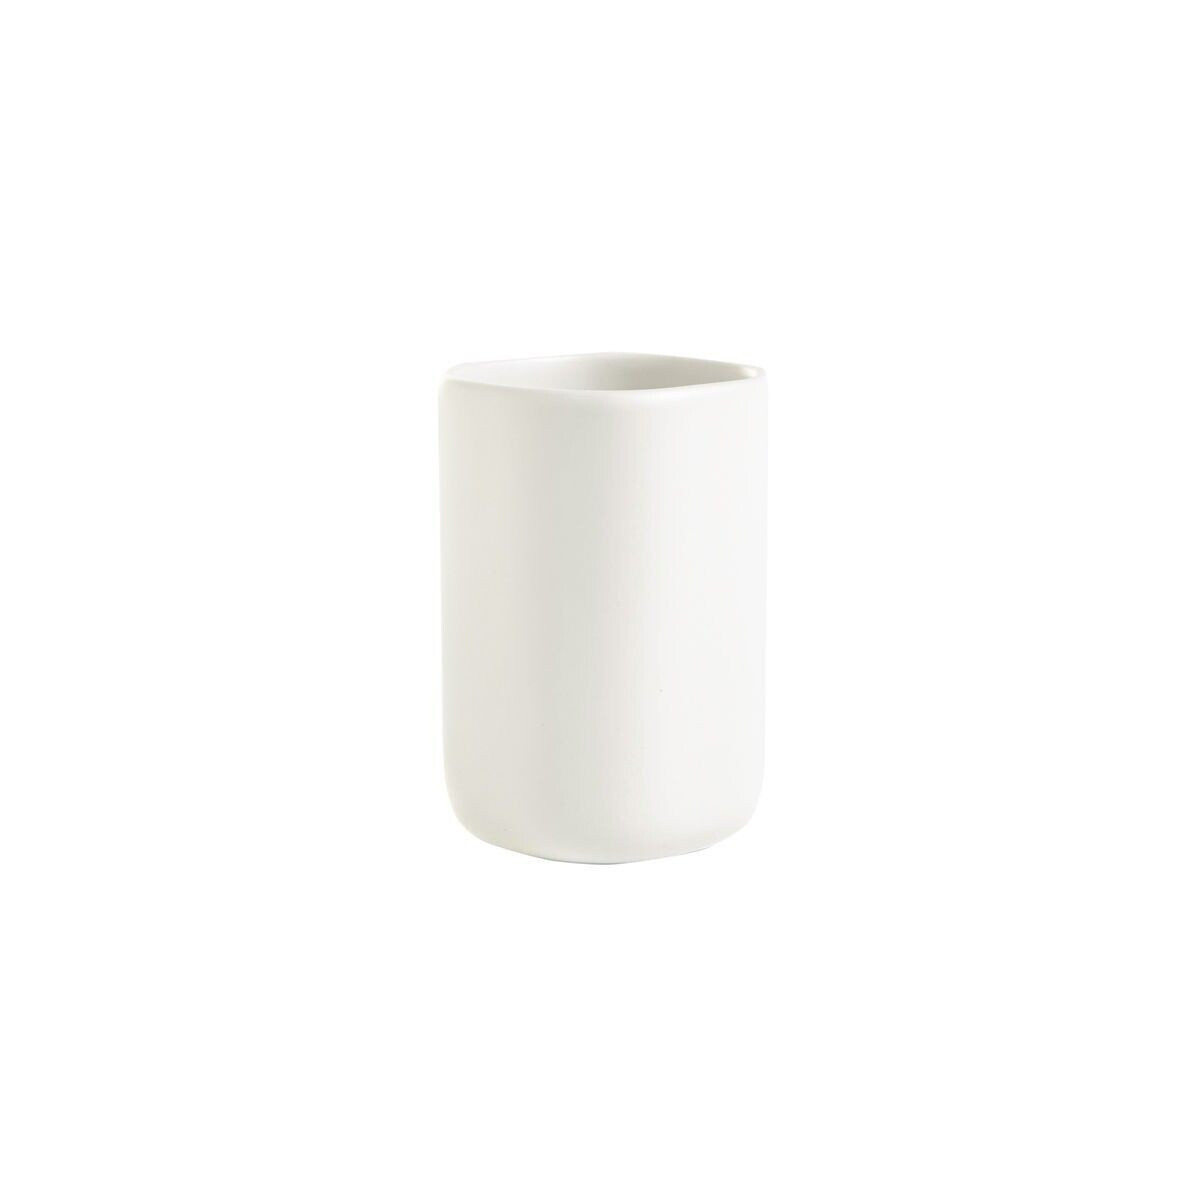 Loft ceramic toothbrush holder, White, large image number 0